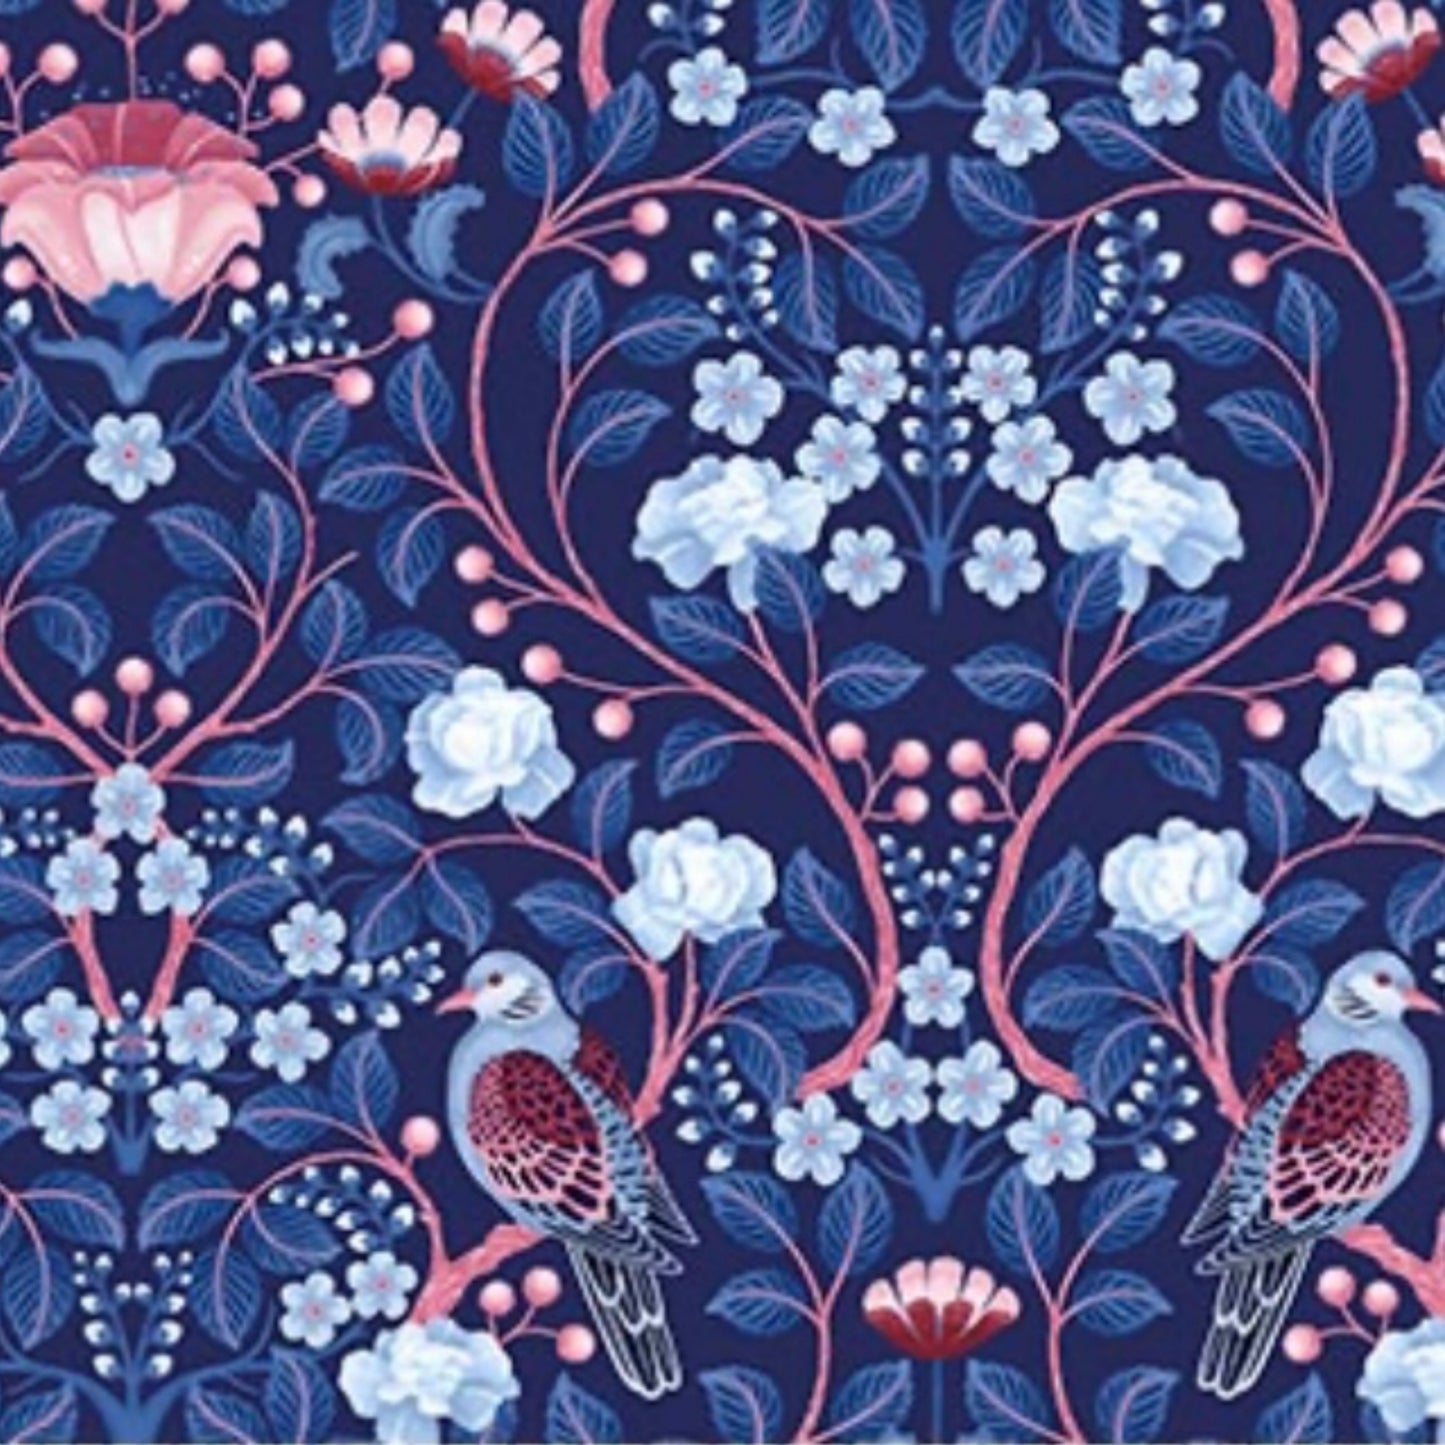 Willowberry Lane - Large Decor Damask - Royal Multi from Northcott Fabrics